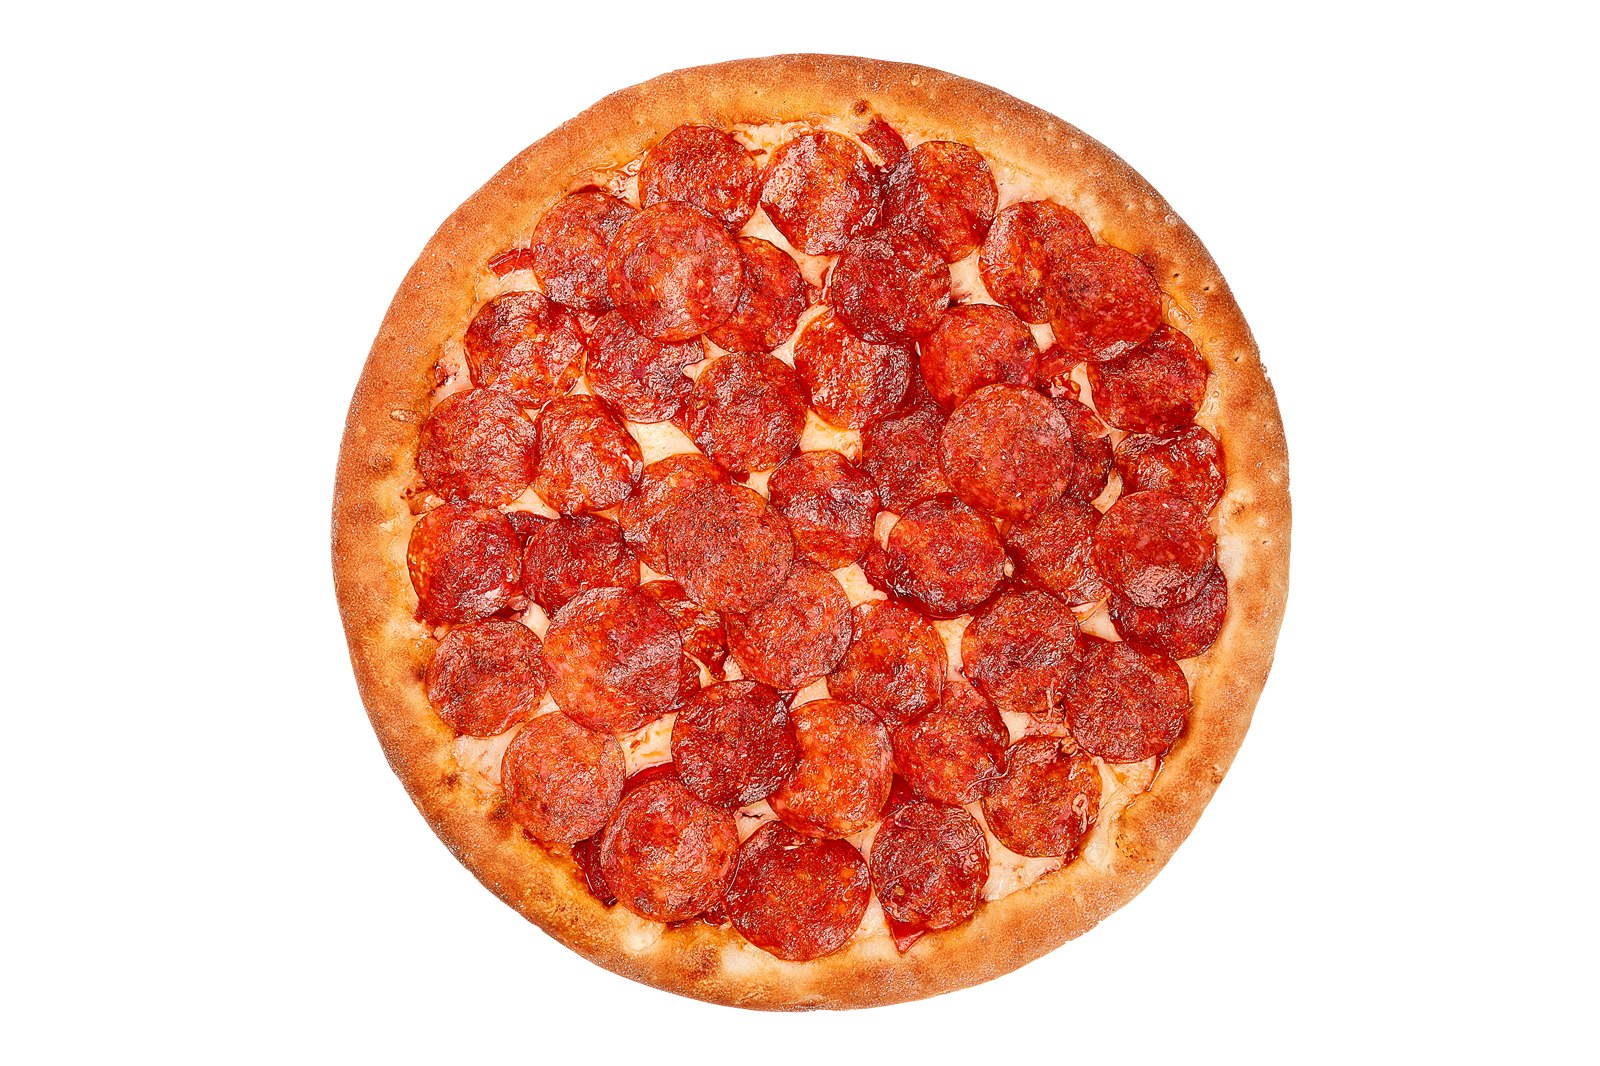 что означает пепперони в пицце фото 107